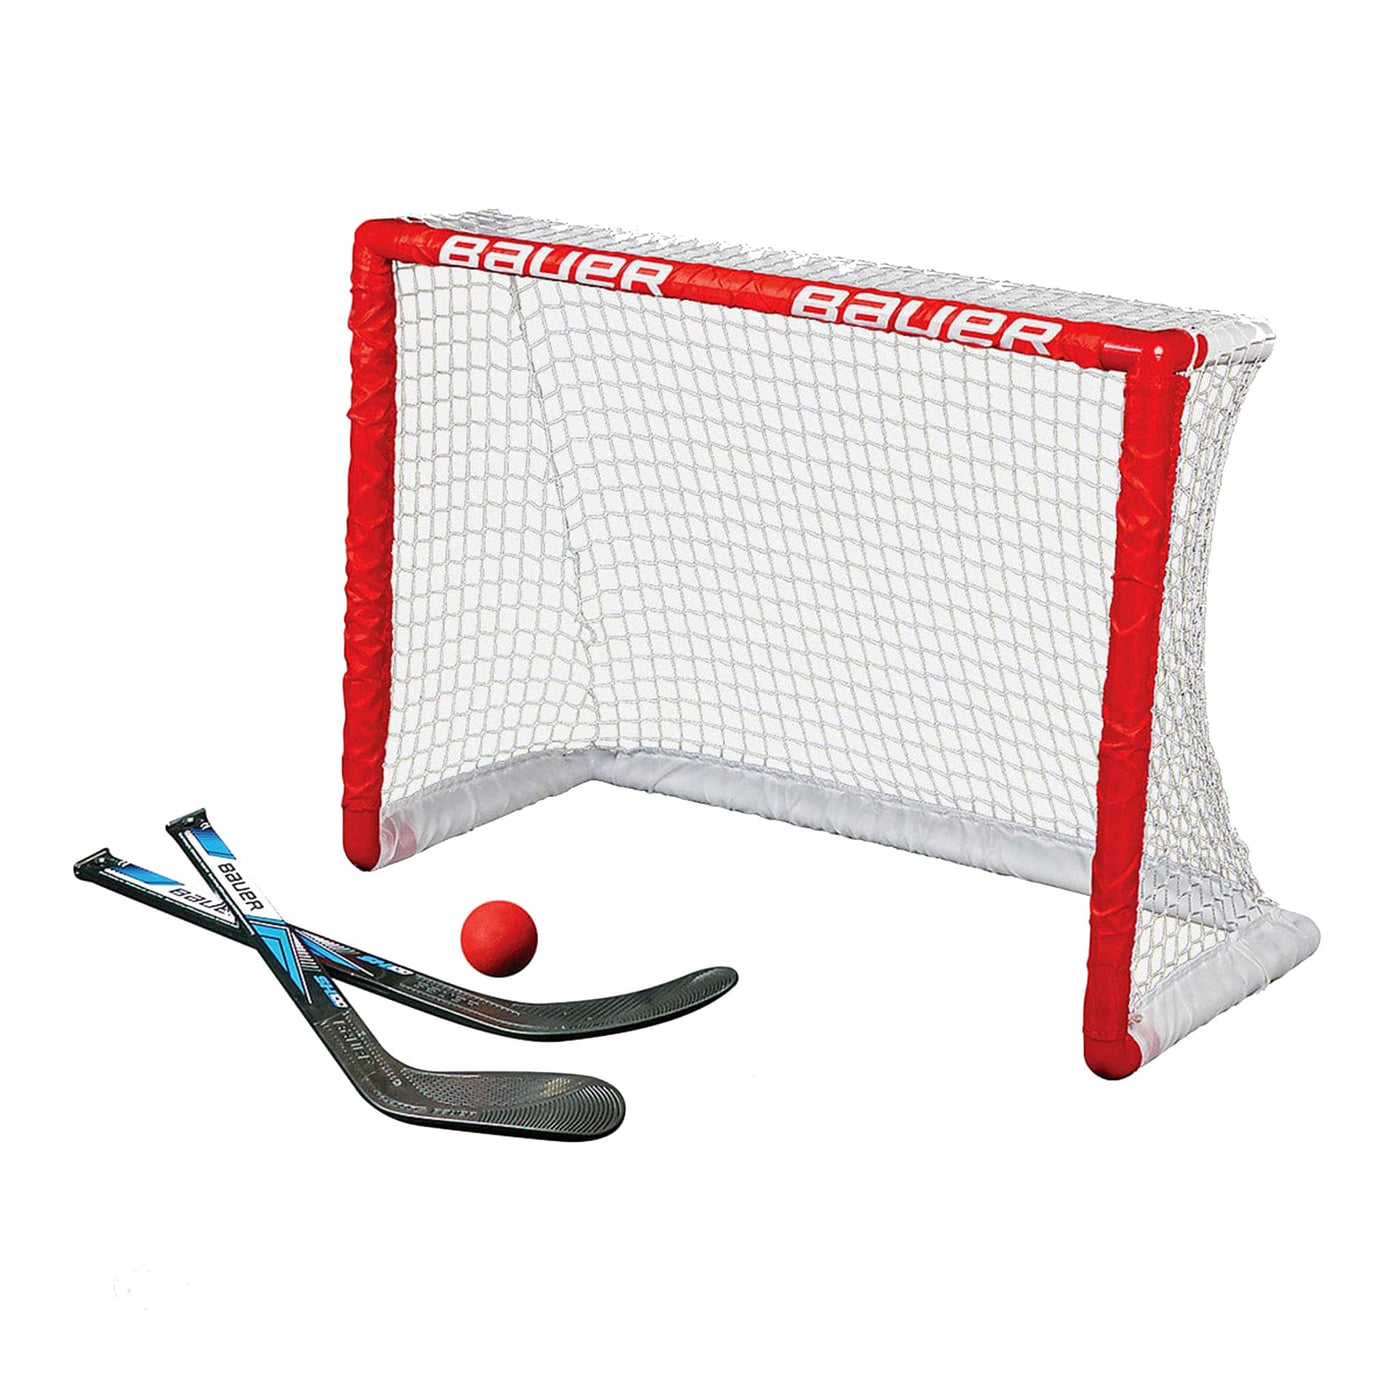 Bauer Pro Mini Hockey Net - The Hockey Shop Source For Sports